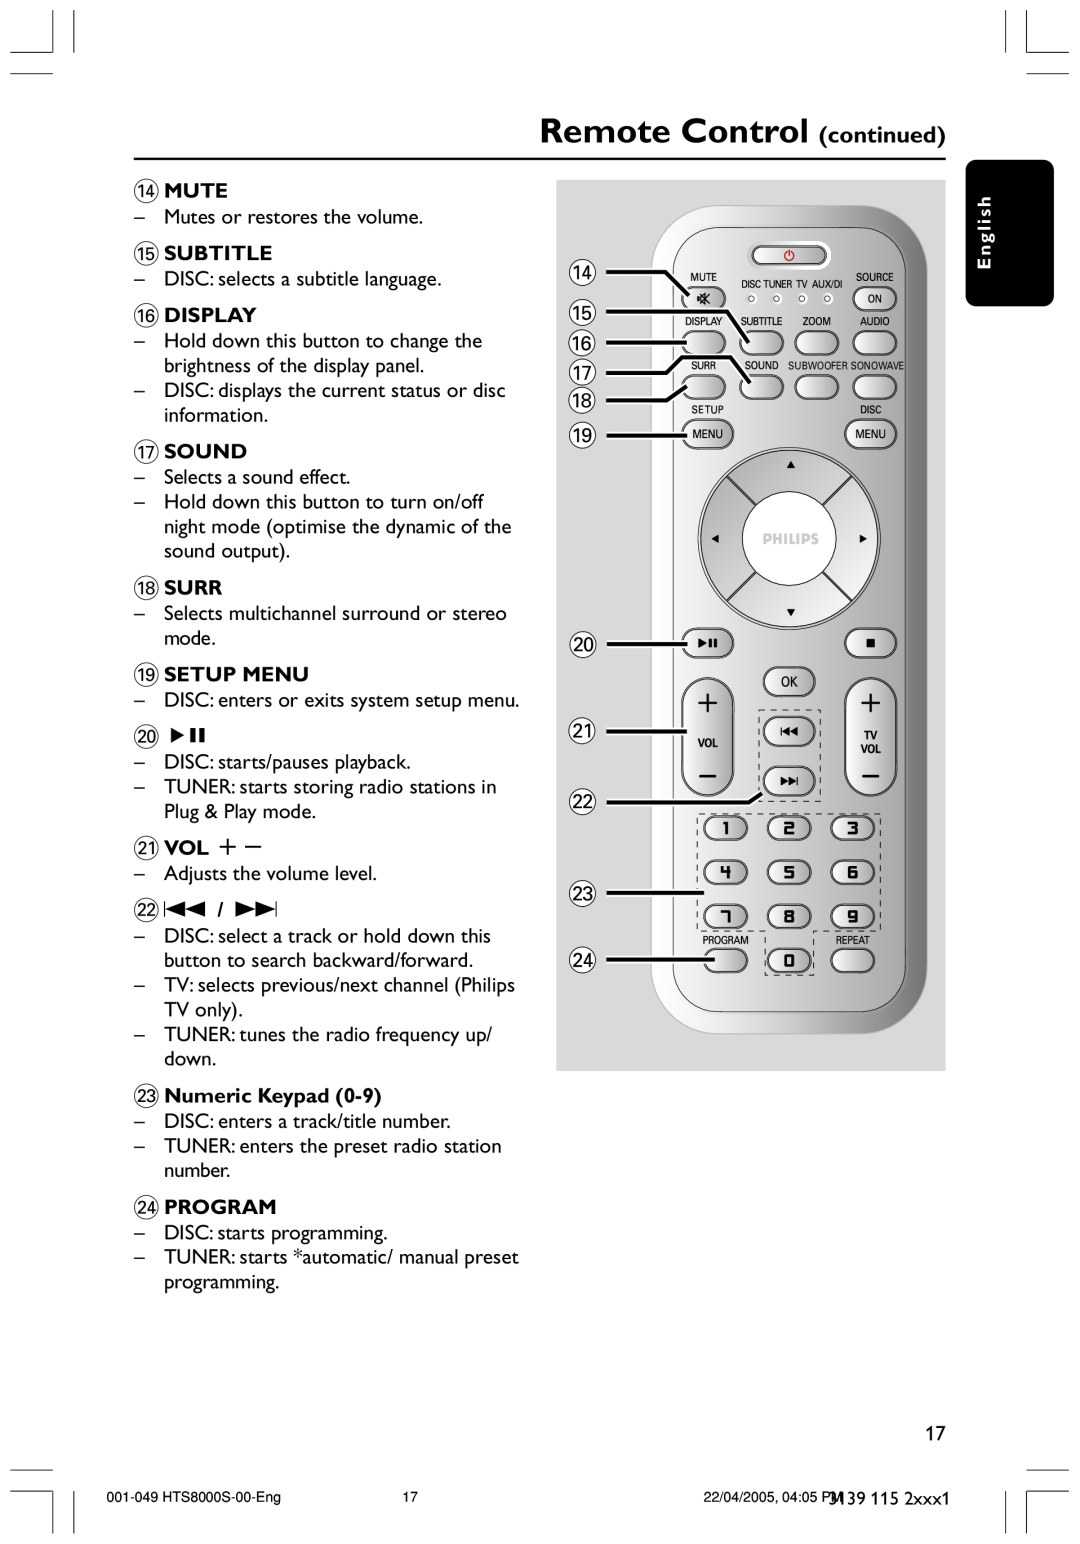 Philips HTS8000S Remote Control continued, $ %, $Mute, Subtitle, Display, Sound, Surr, Setup Menu, ¡Vol +, £Numeric Keypad 